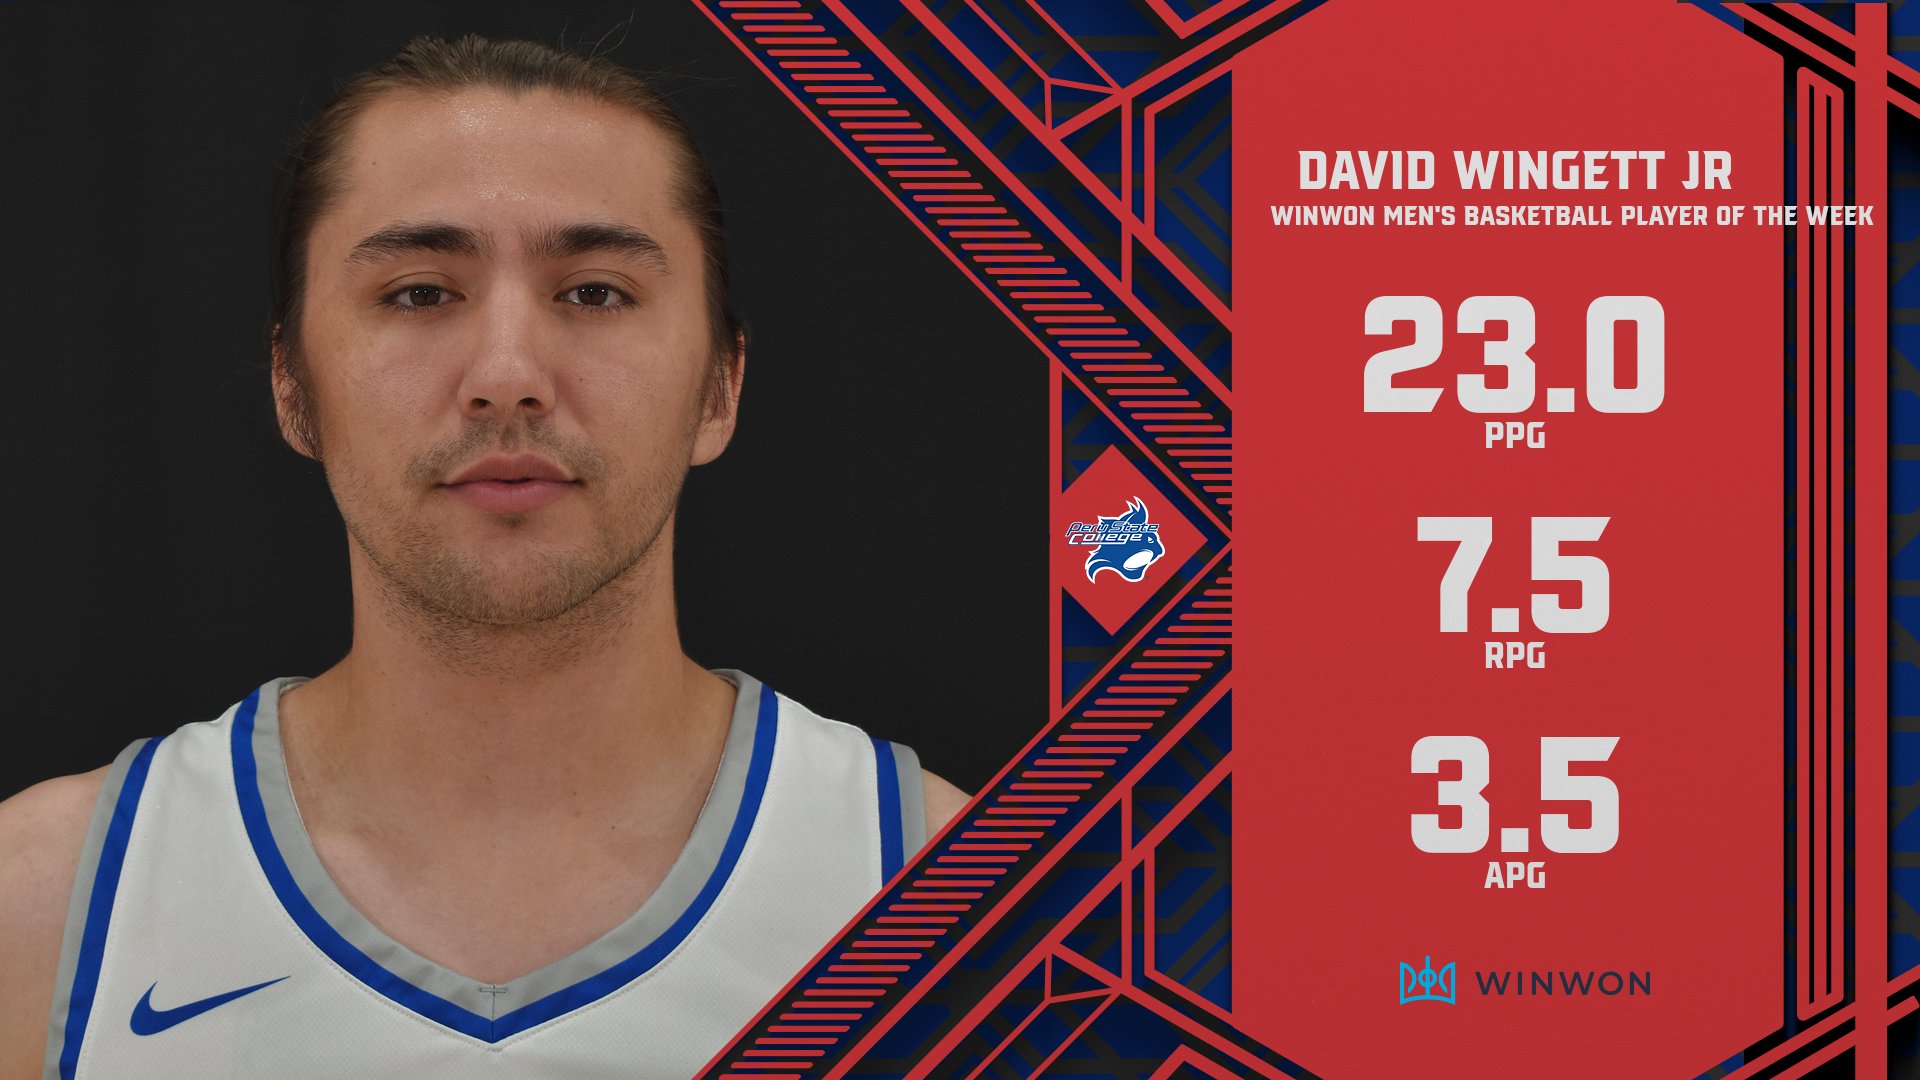 Peru State’s Wingett Jr. Selected WinWon Men’s Basketball Player of the Week